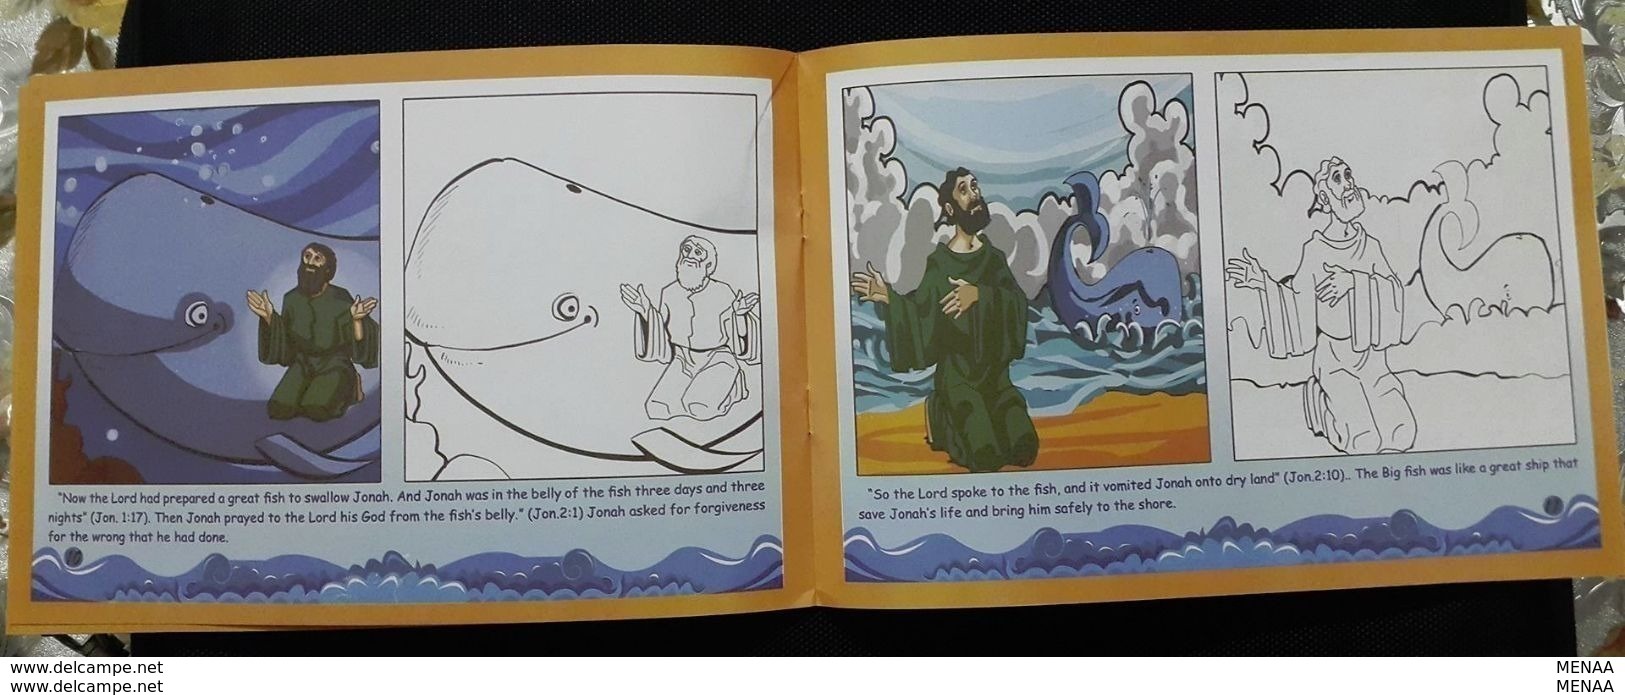 EGYPT - MY HOLY BIBLE - Tourist Christian Booklet - Bilderbücher